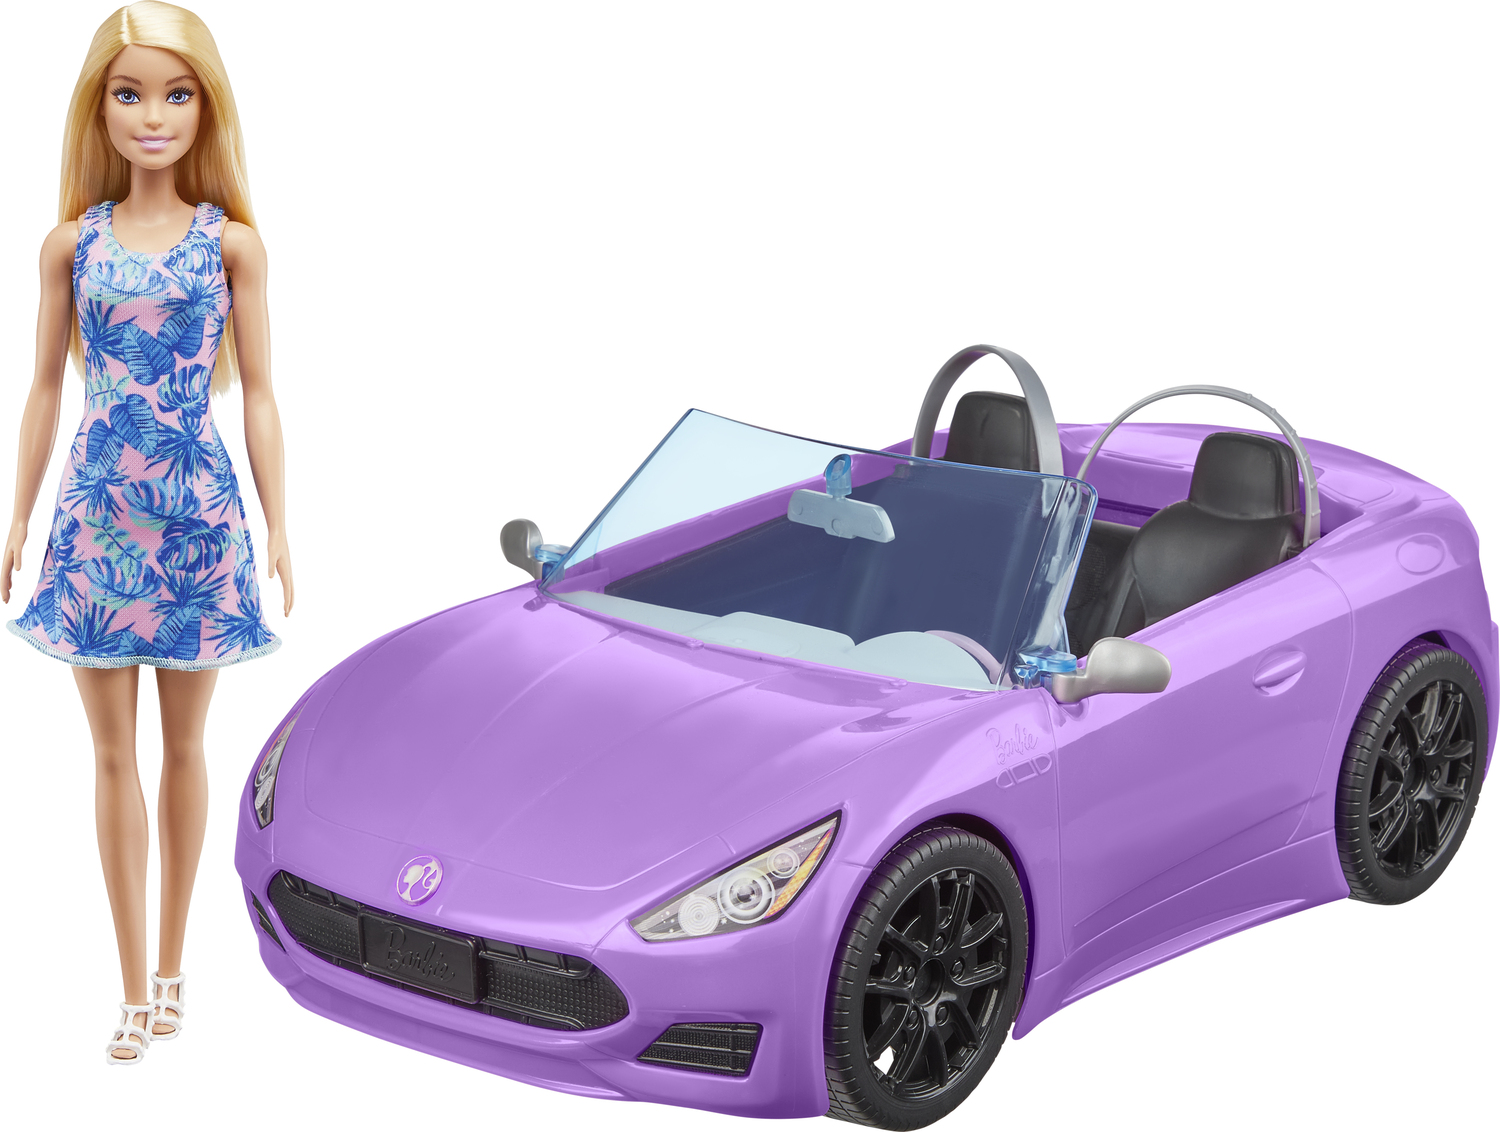 Hej Akkumulerede ungdomskriminalitet Barbie Doll/Vehicle (Blonde) - The Toy Box Hanover